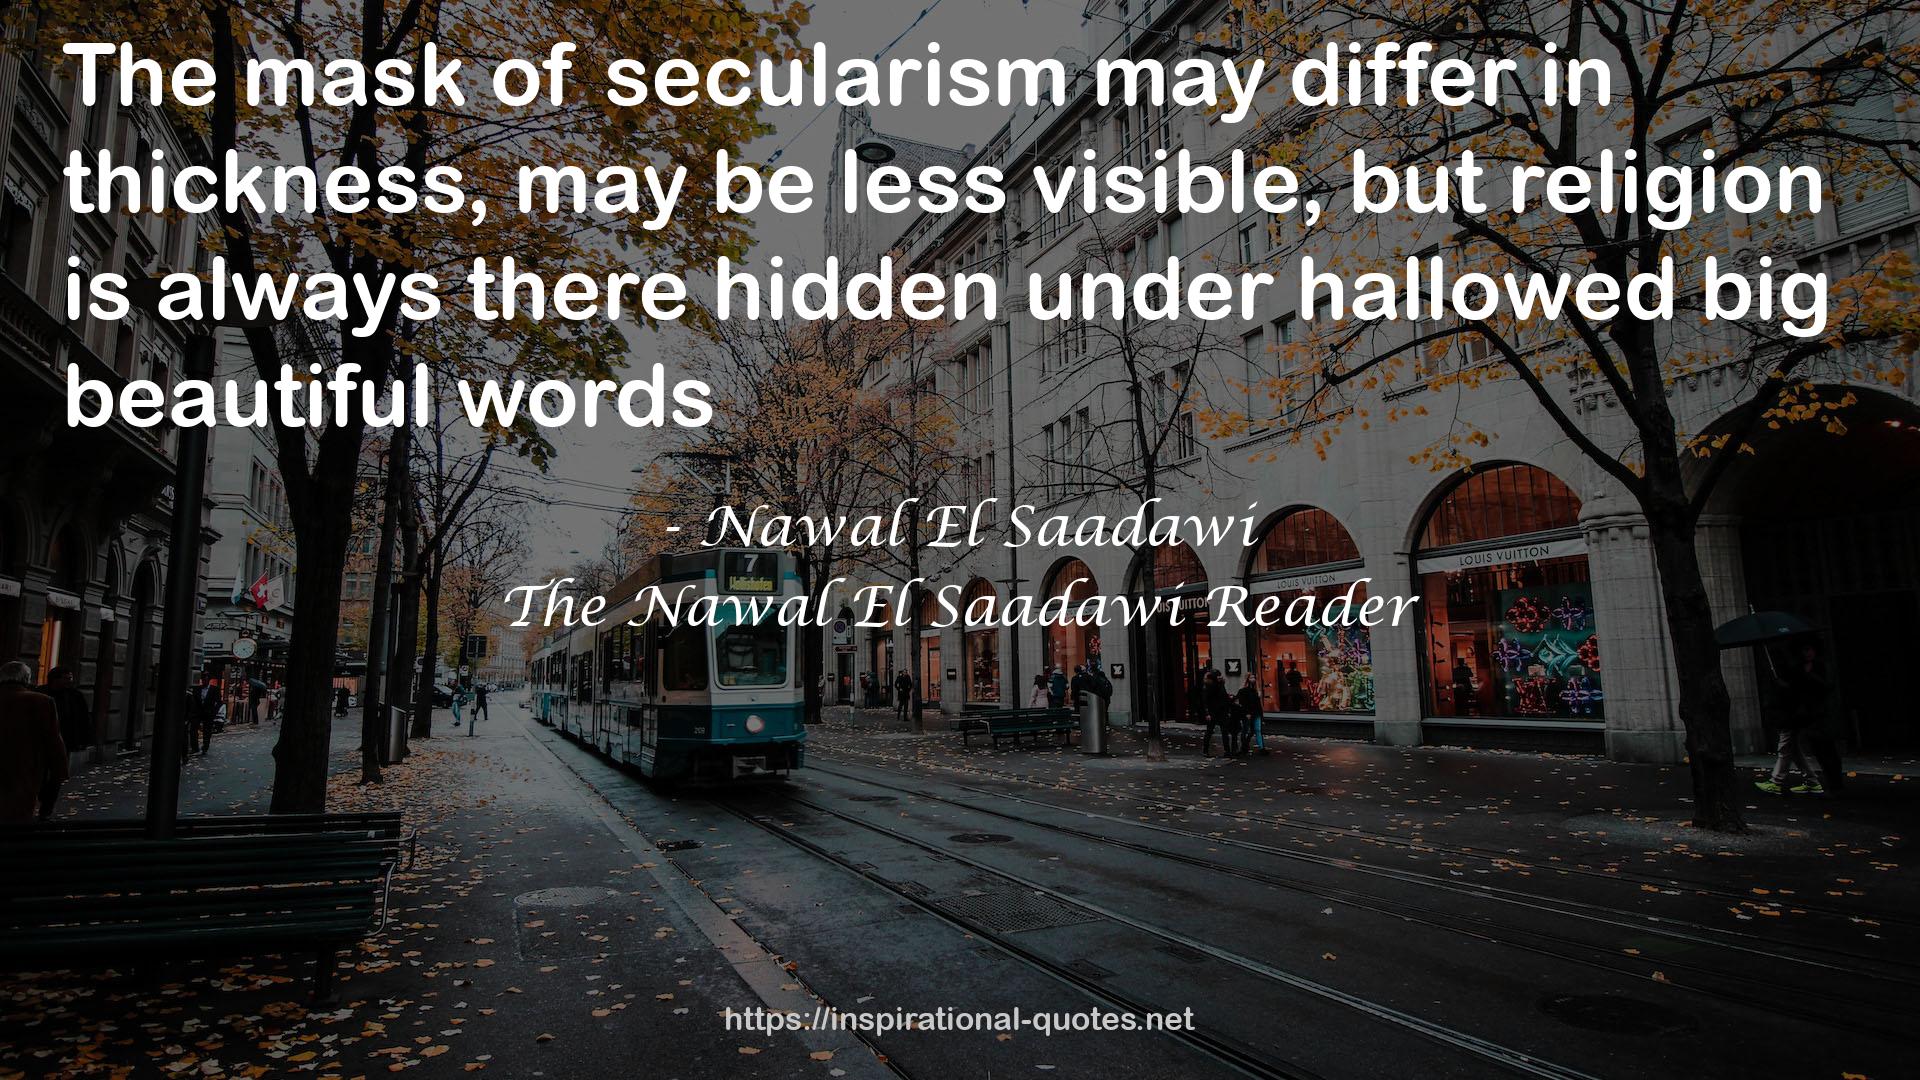 The Nawal El Saadawi Reader QUOTES